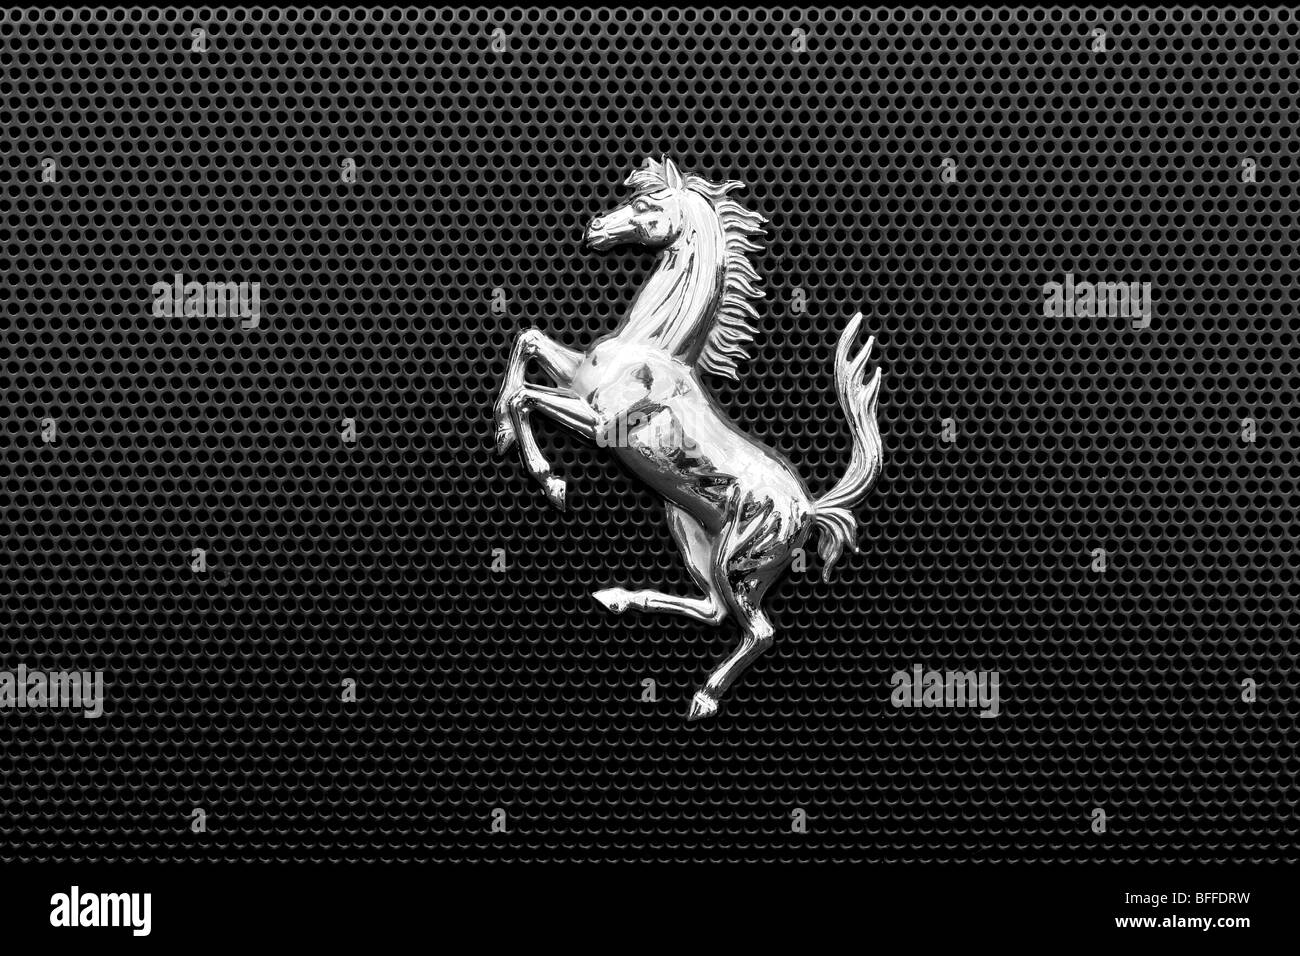 Ferrari prancing horse (Cavallino Rampante) badge logo Stock Photo